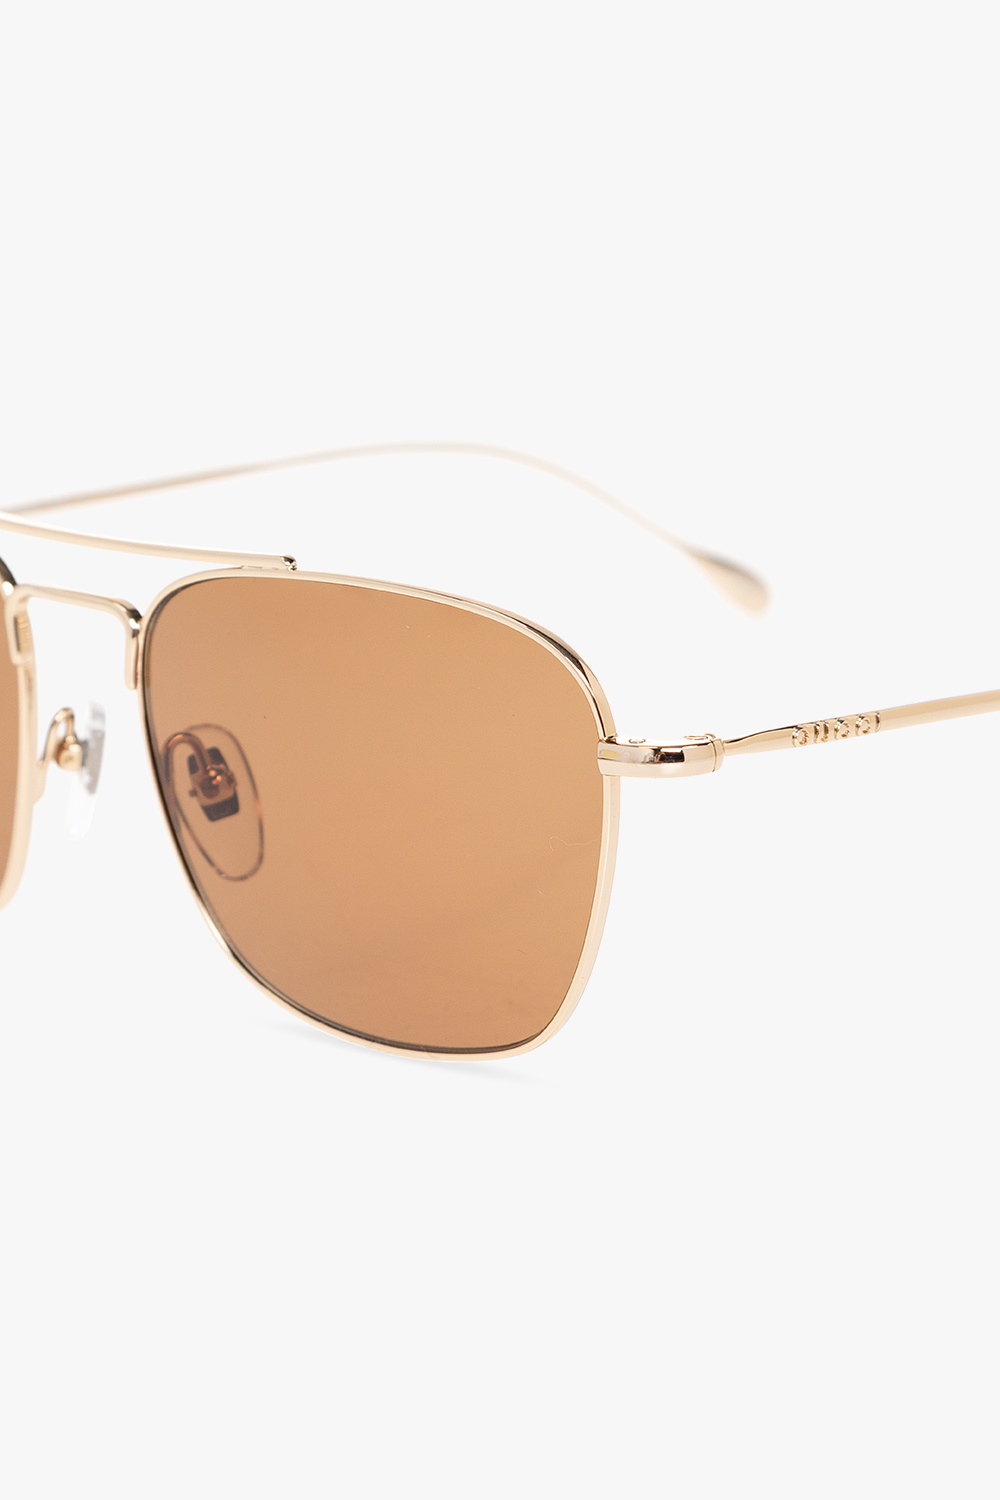 Gucci Logo-engraved sunglasses